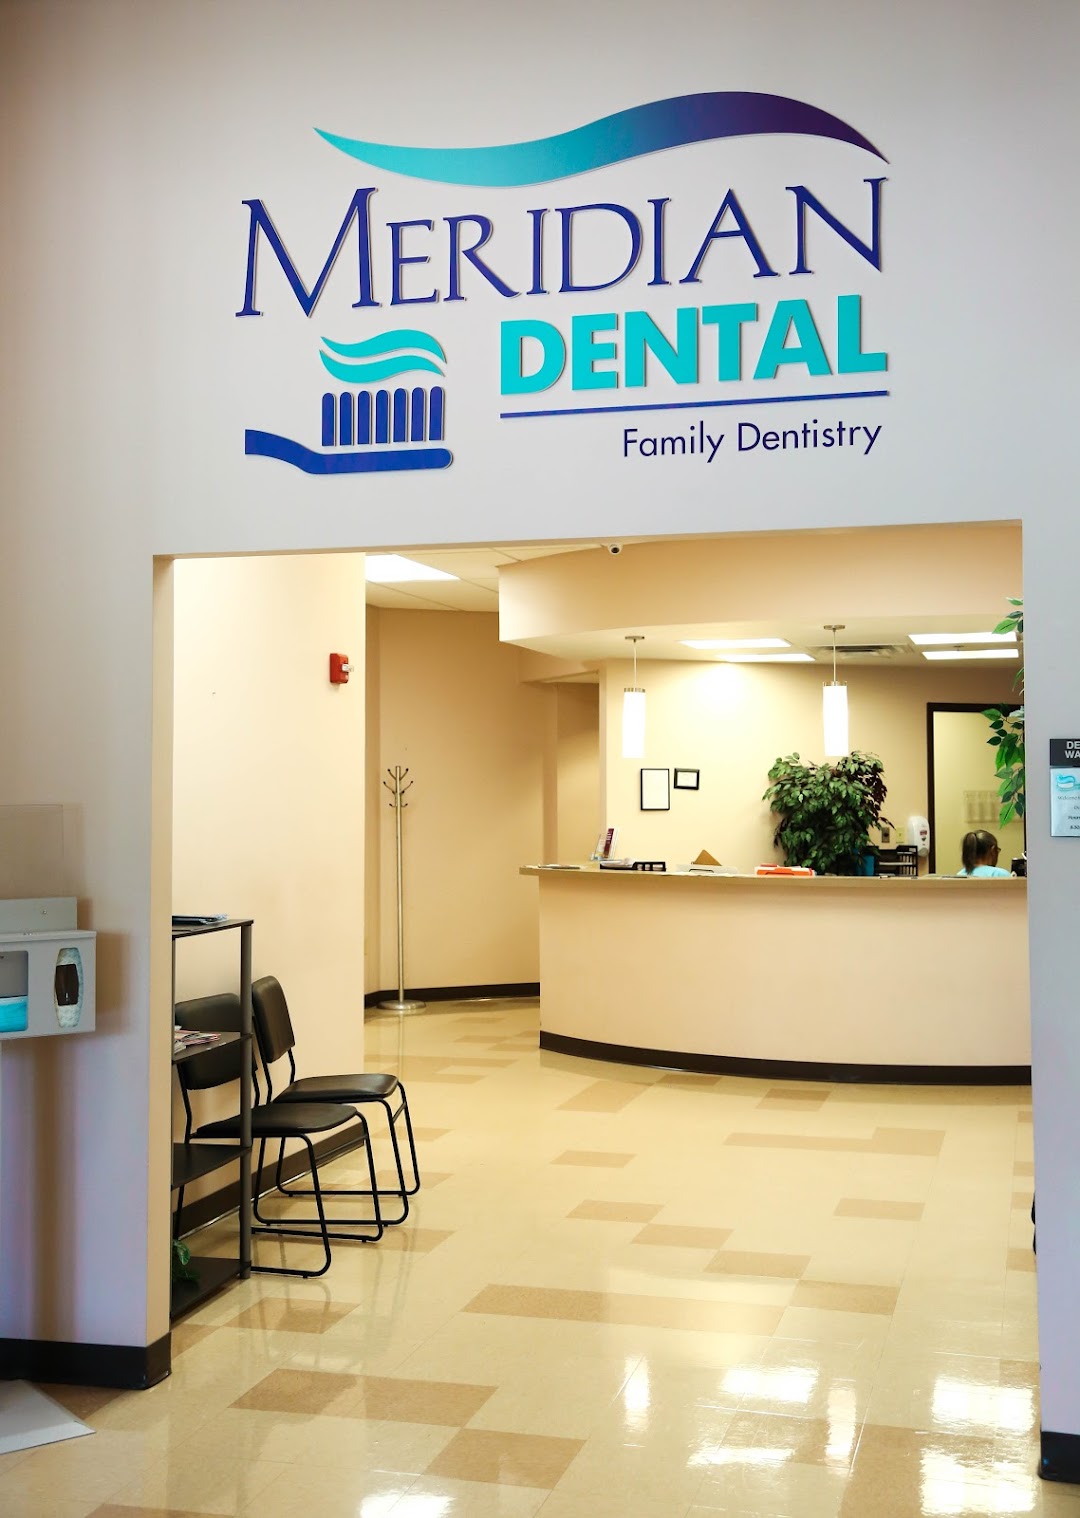 Meridian DentalFamily Dentistry